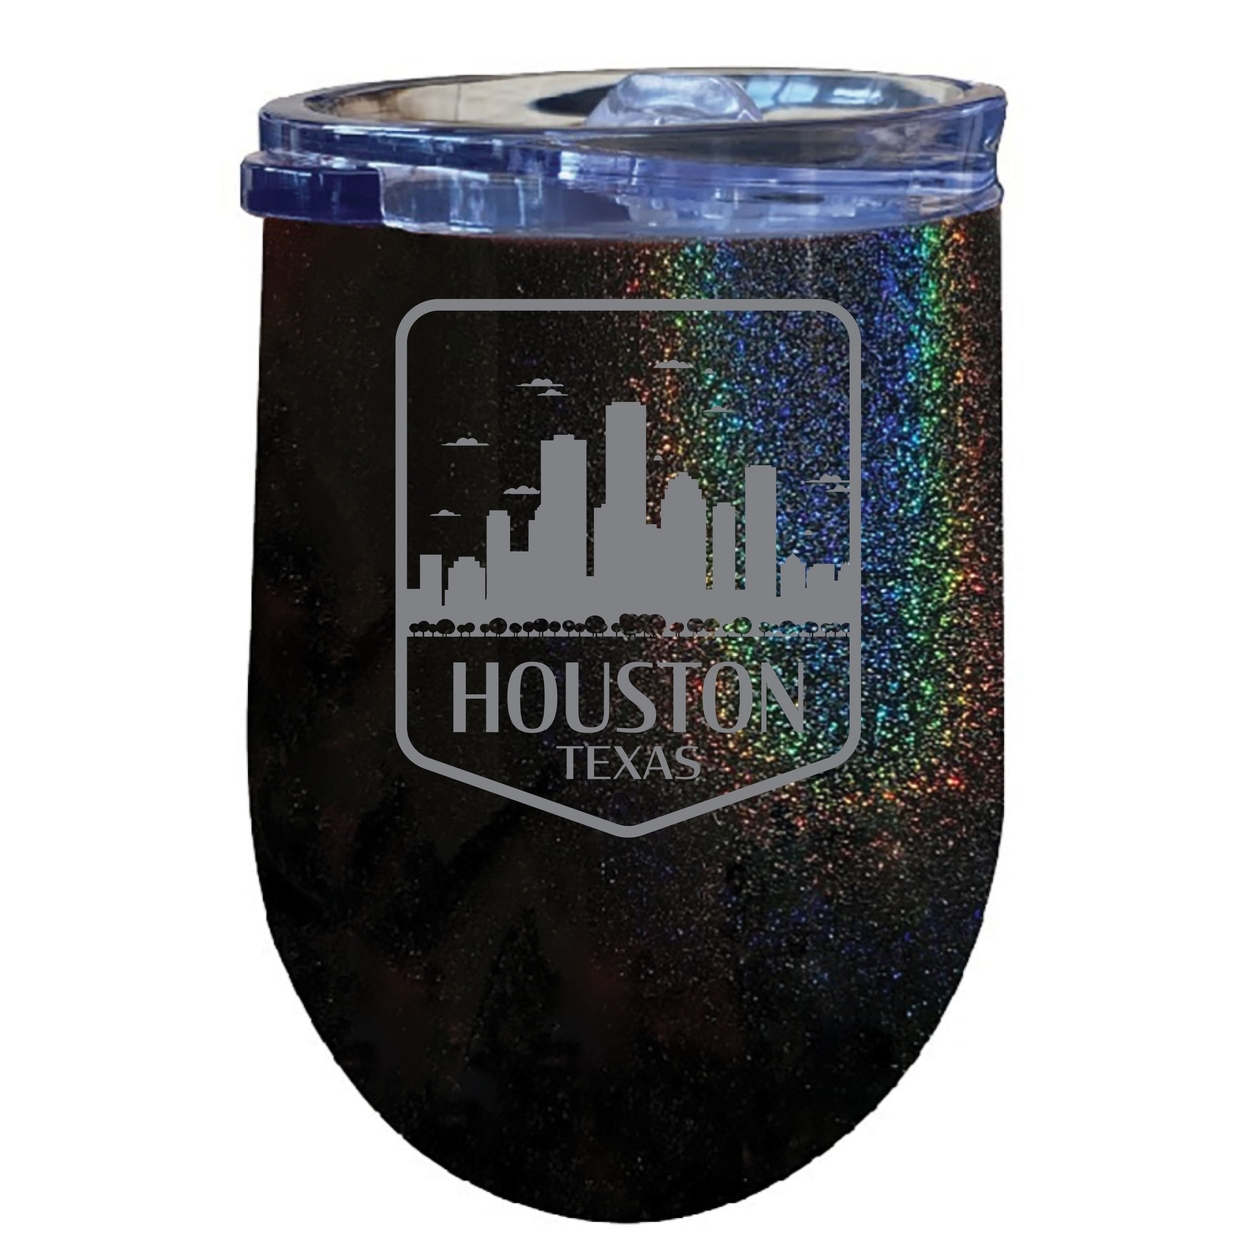 Houston Texas Souvenir 12 Oz Engraved Insulated Wine Stainless Steel Tumbler - Black,,2-Pack